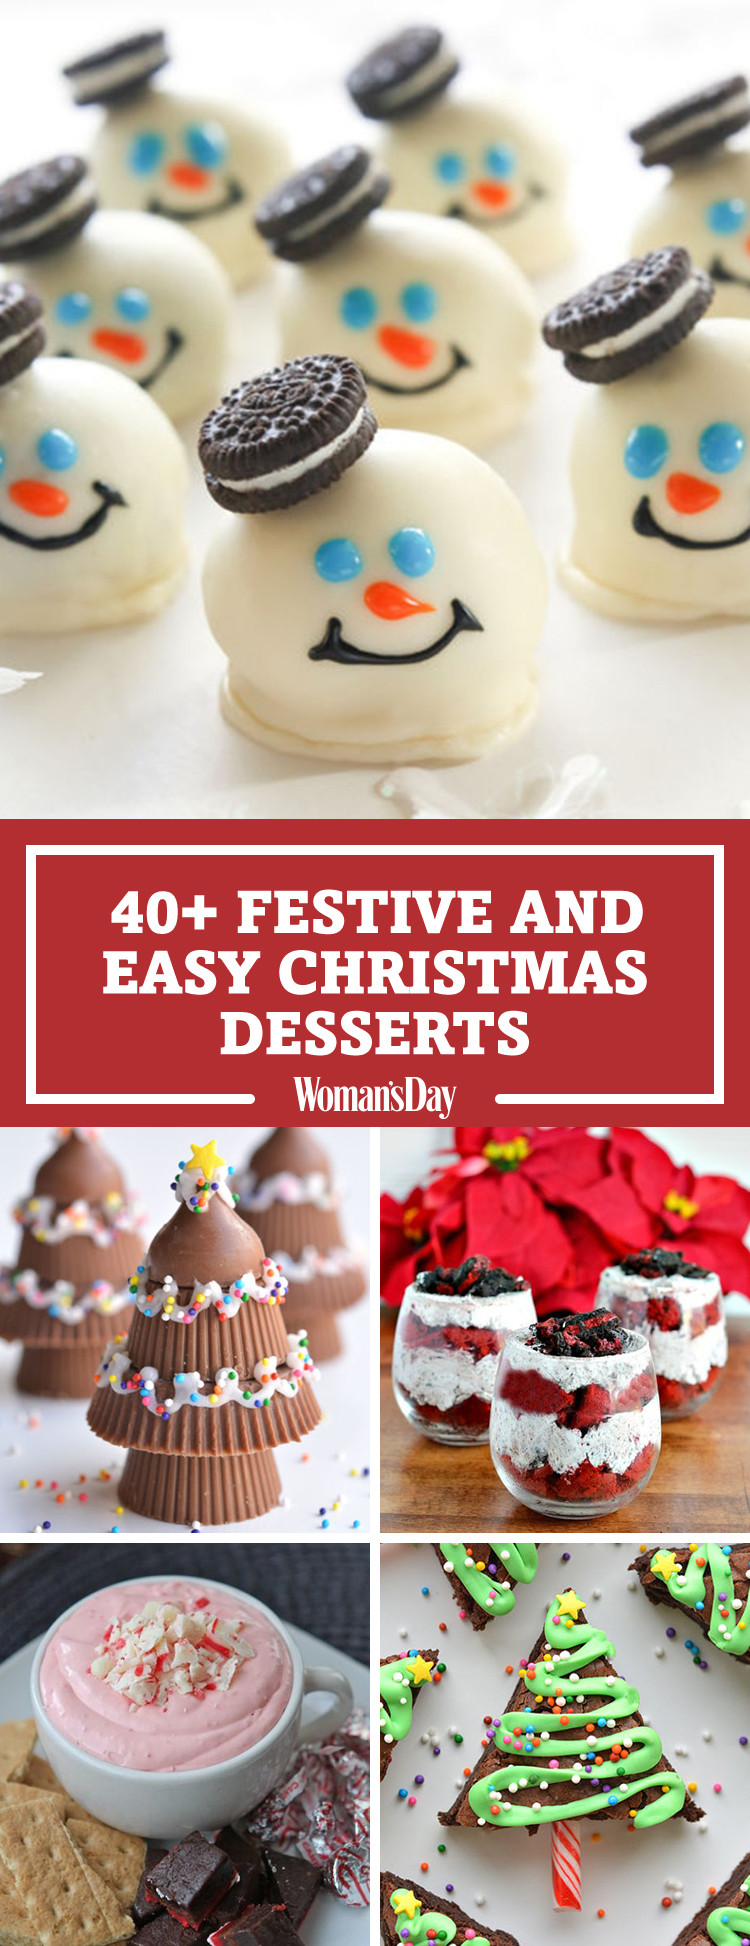 Easy Christmas Desserts
 57 Easy Christmas Dessert Recipes Best Ideas for Fun